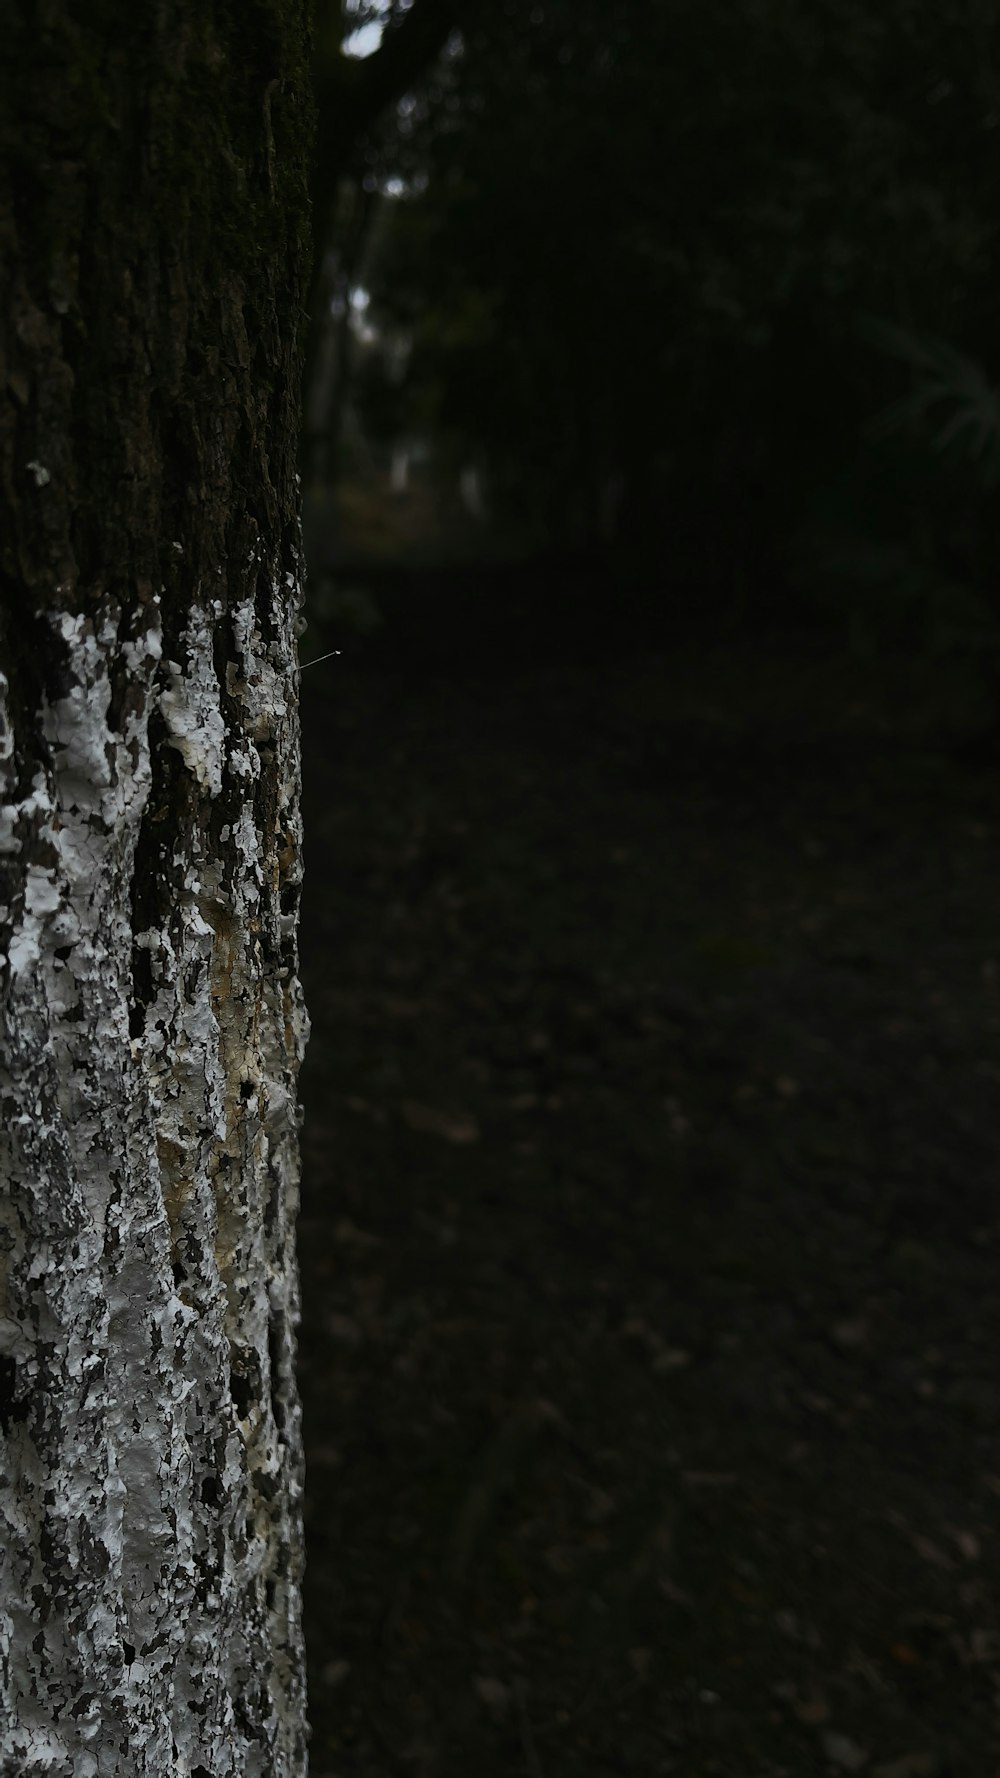 brown tree trunk during night time photo – Free Grey Image on Unsplash